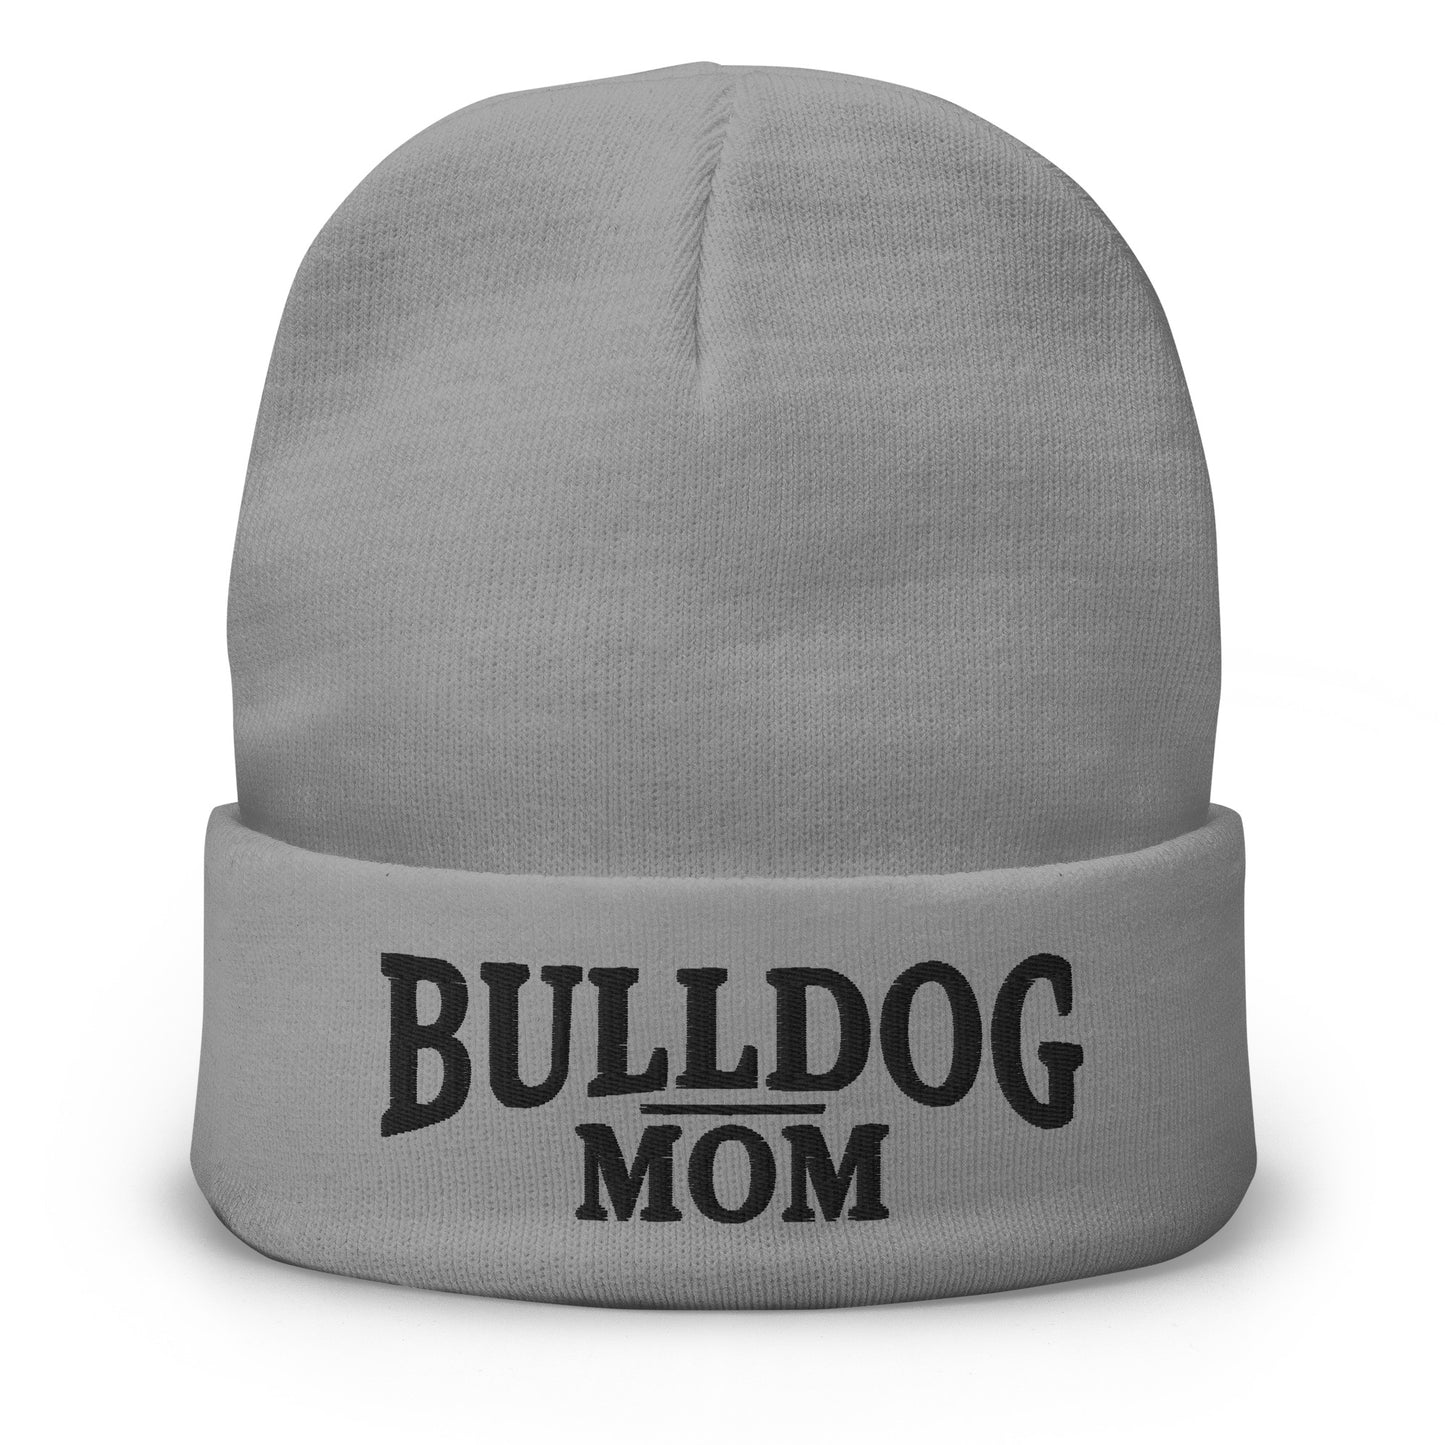 Bulldog Mom Embroidered Beanie